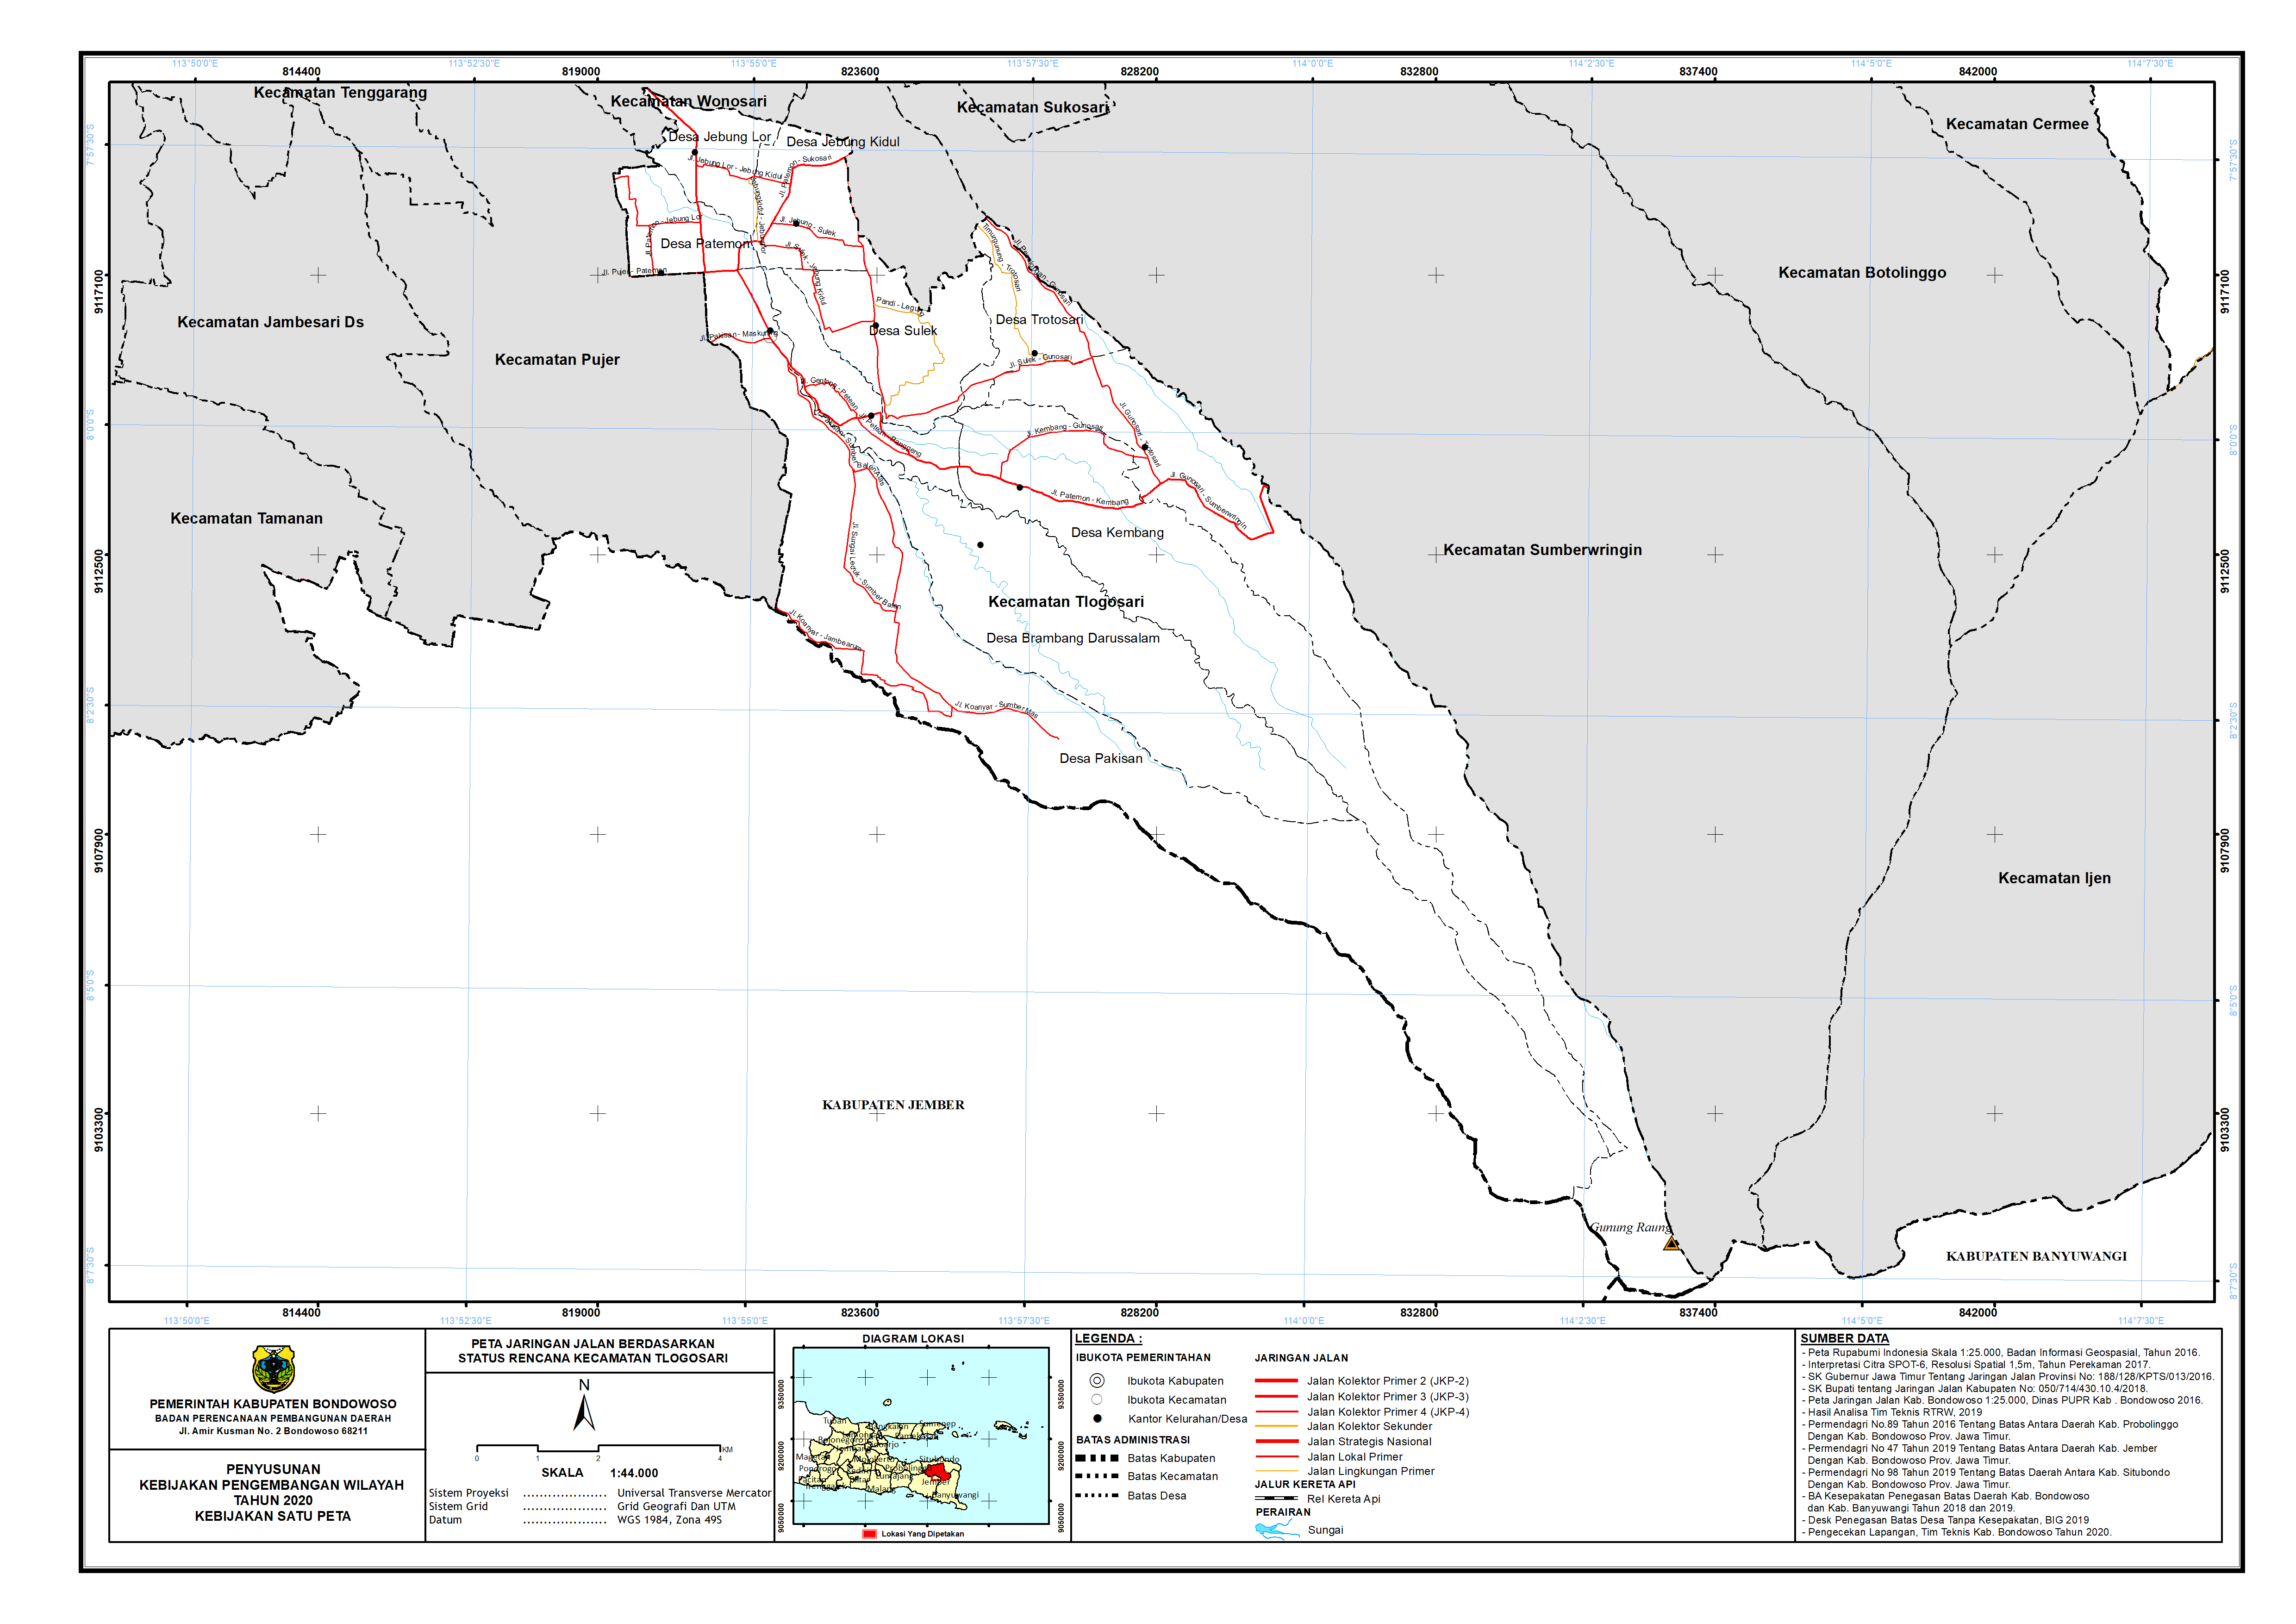 Peta Jaringan Jalan Berdasarkan Status Rencana Kecamatan Tlogosari.png